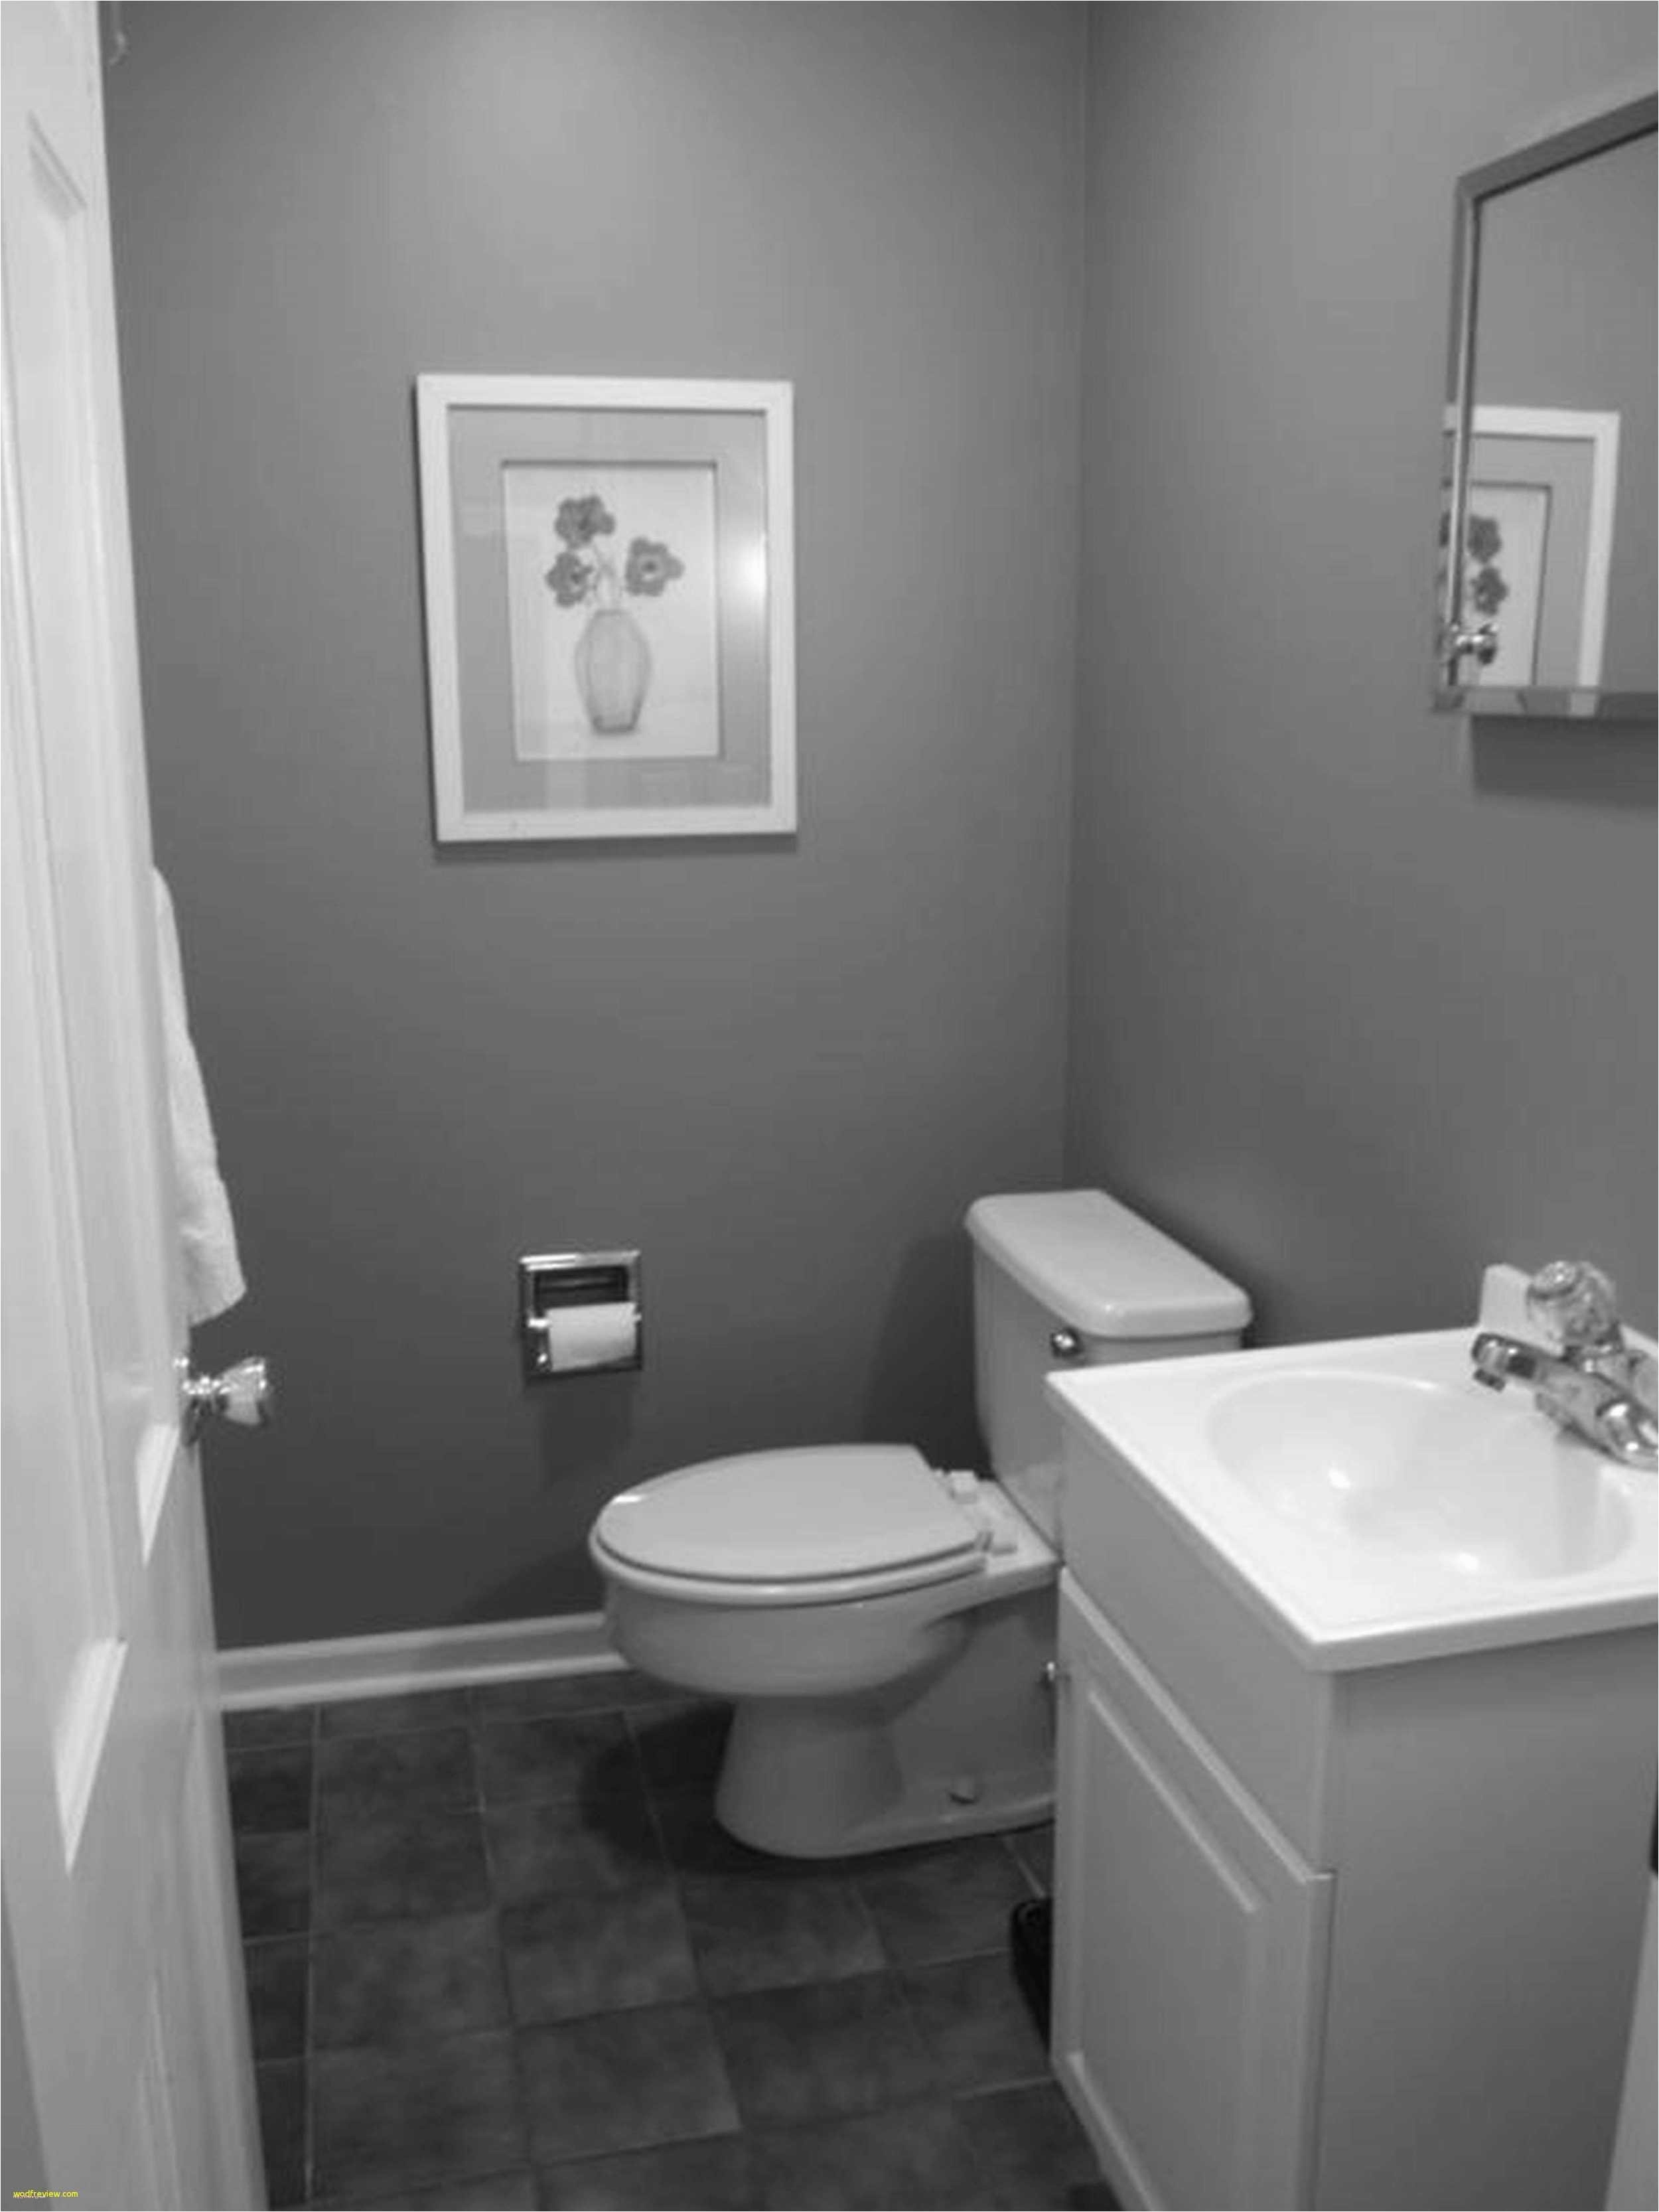 Master Bathroom Design New Master Bathroom Save White Bathroom Designs Fresh Grey Bathroom 0d